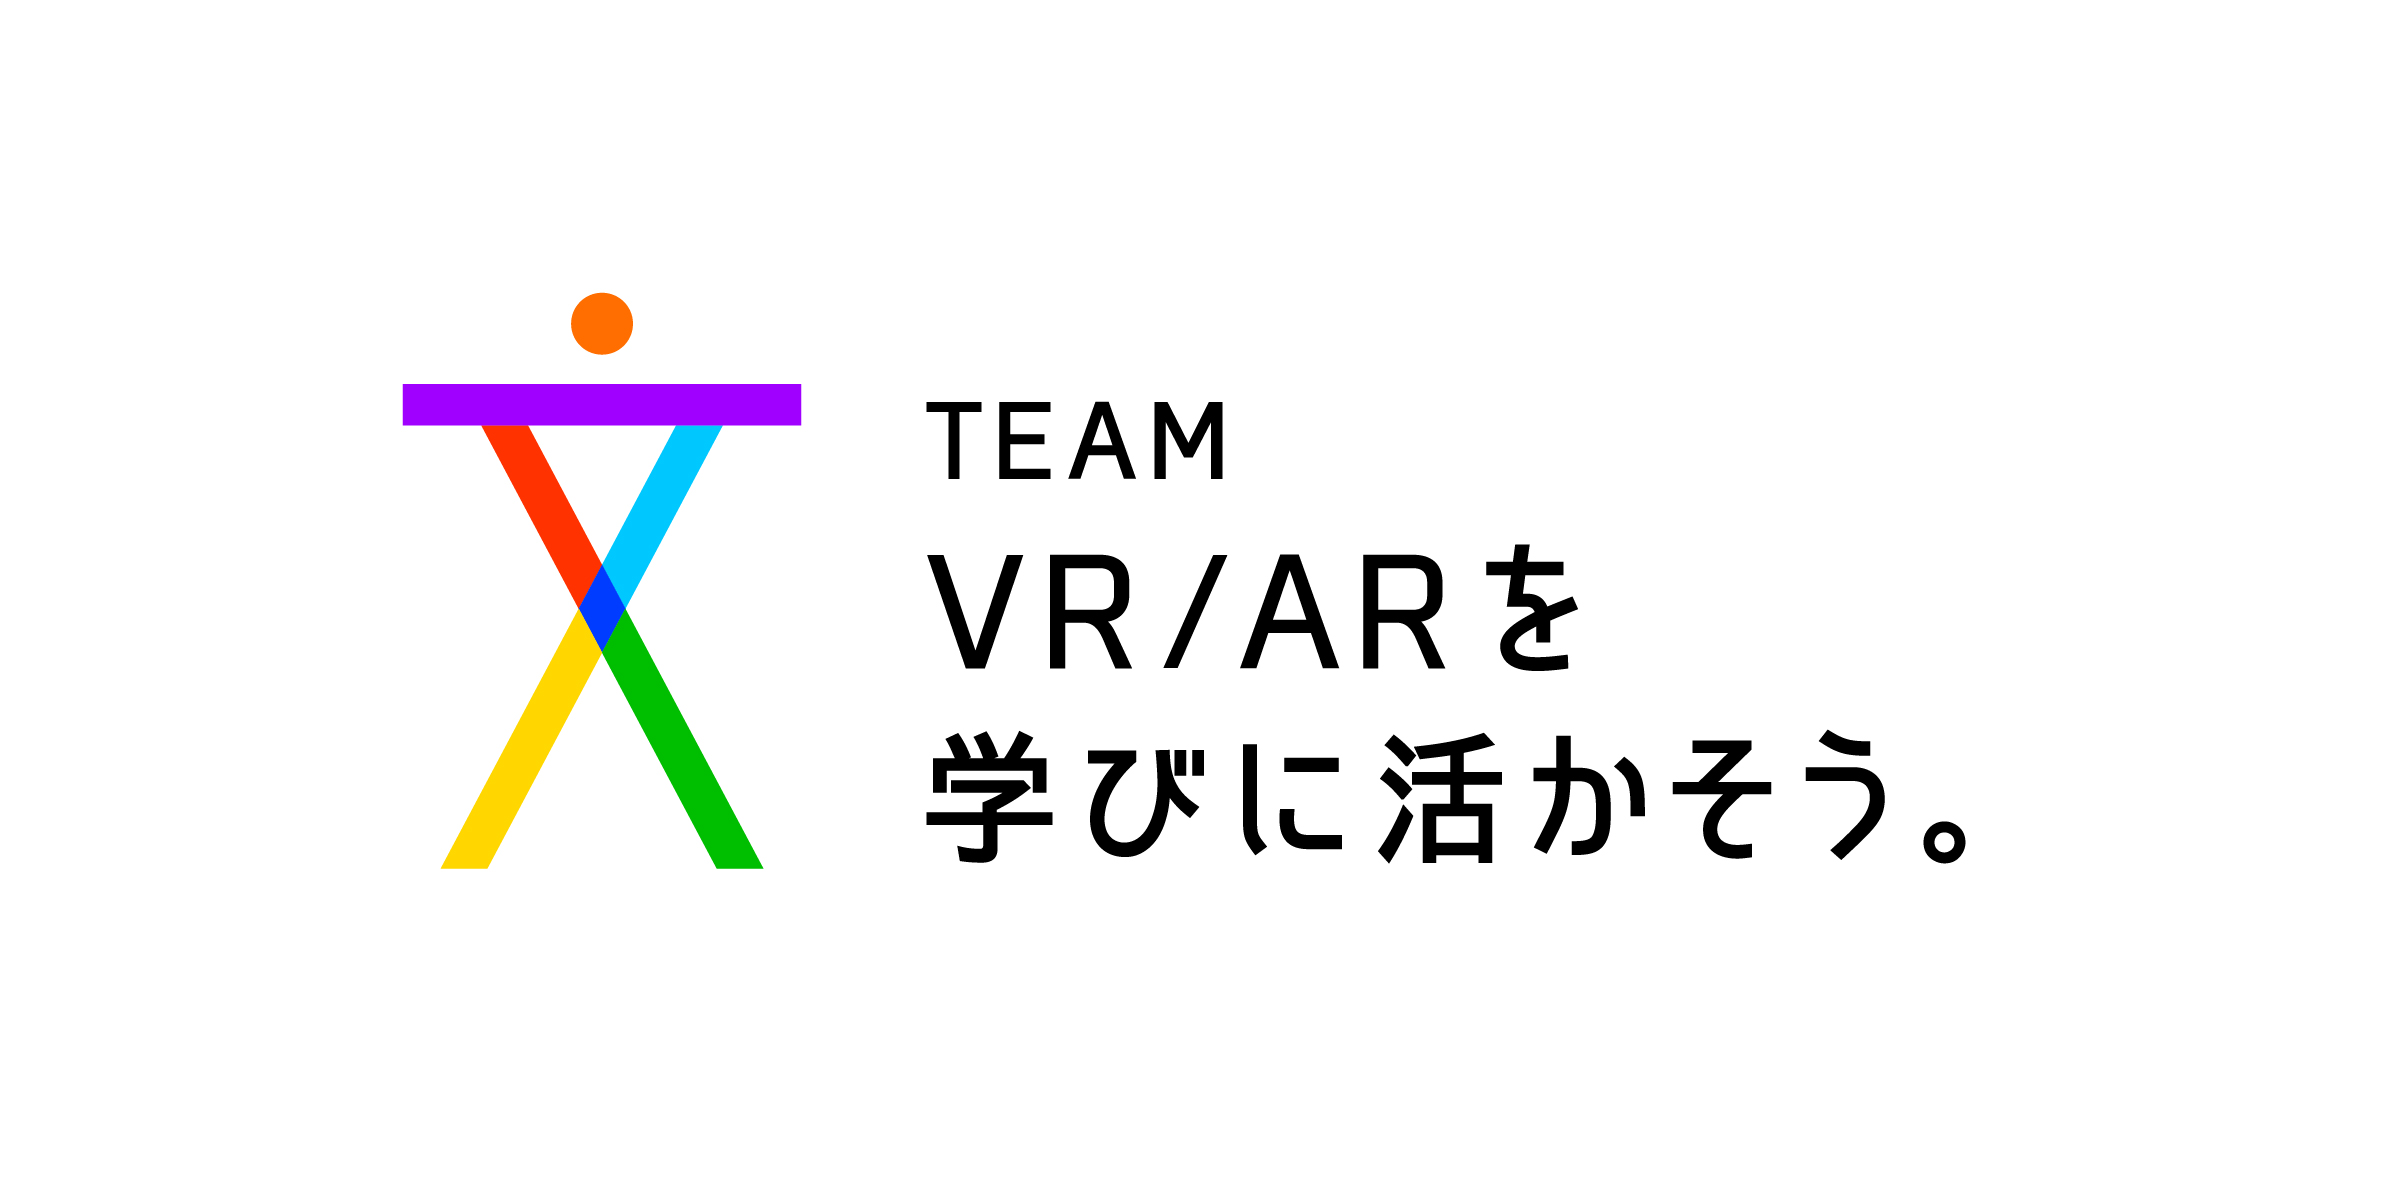 TEAM VR/ARを学びに活かそう。